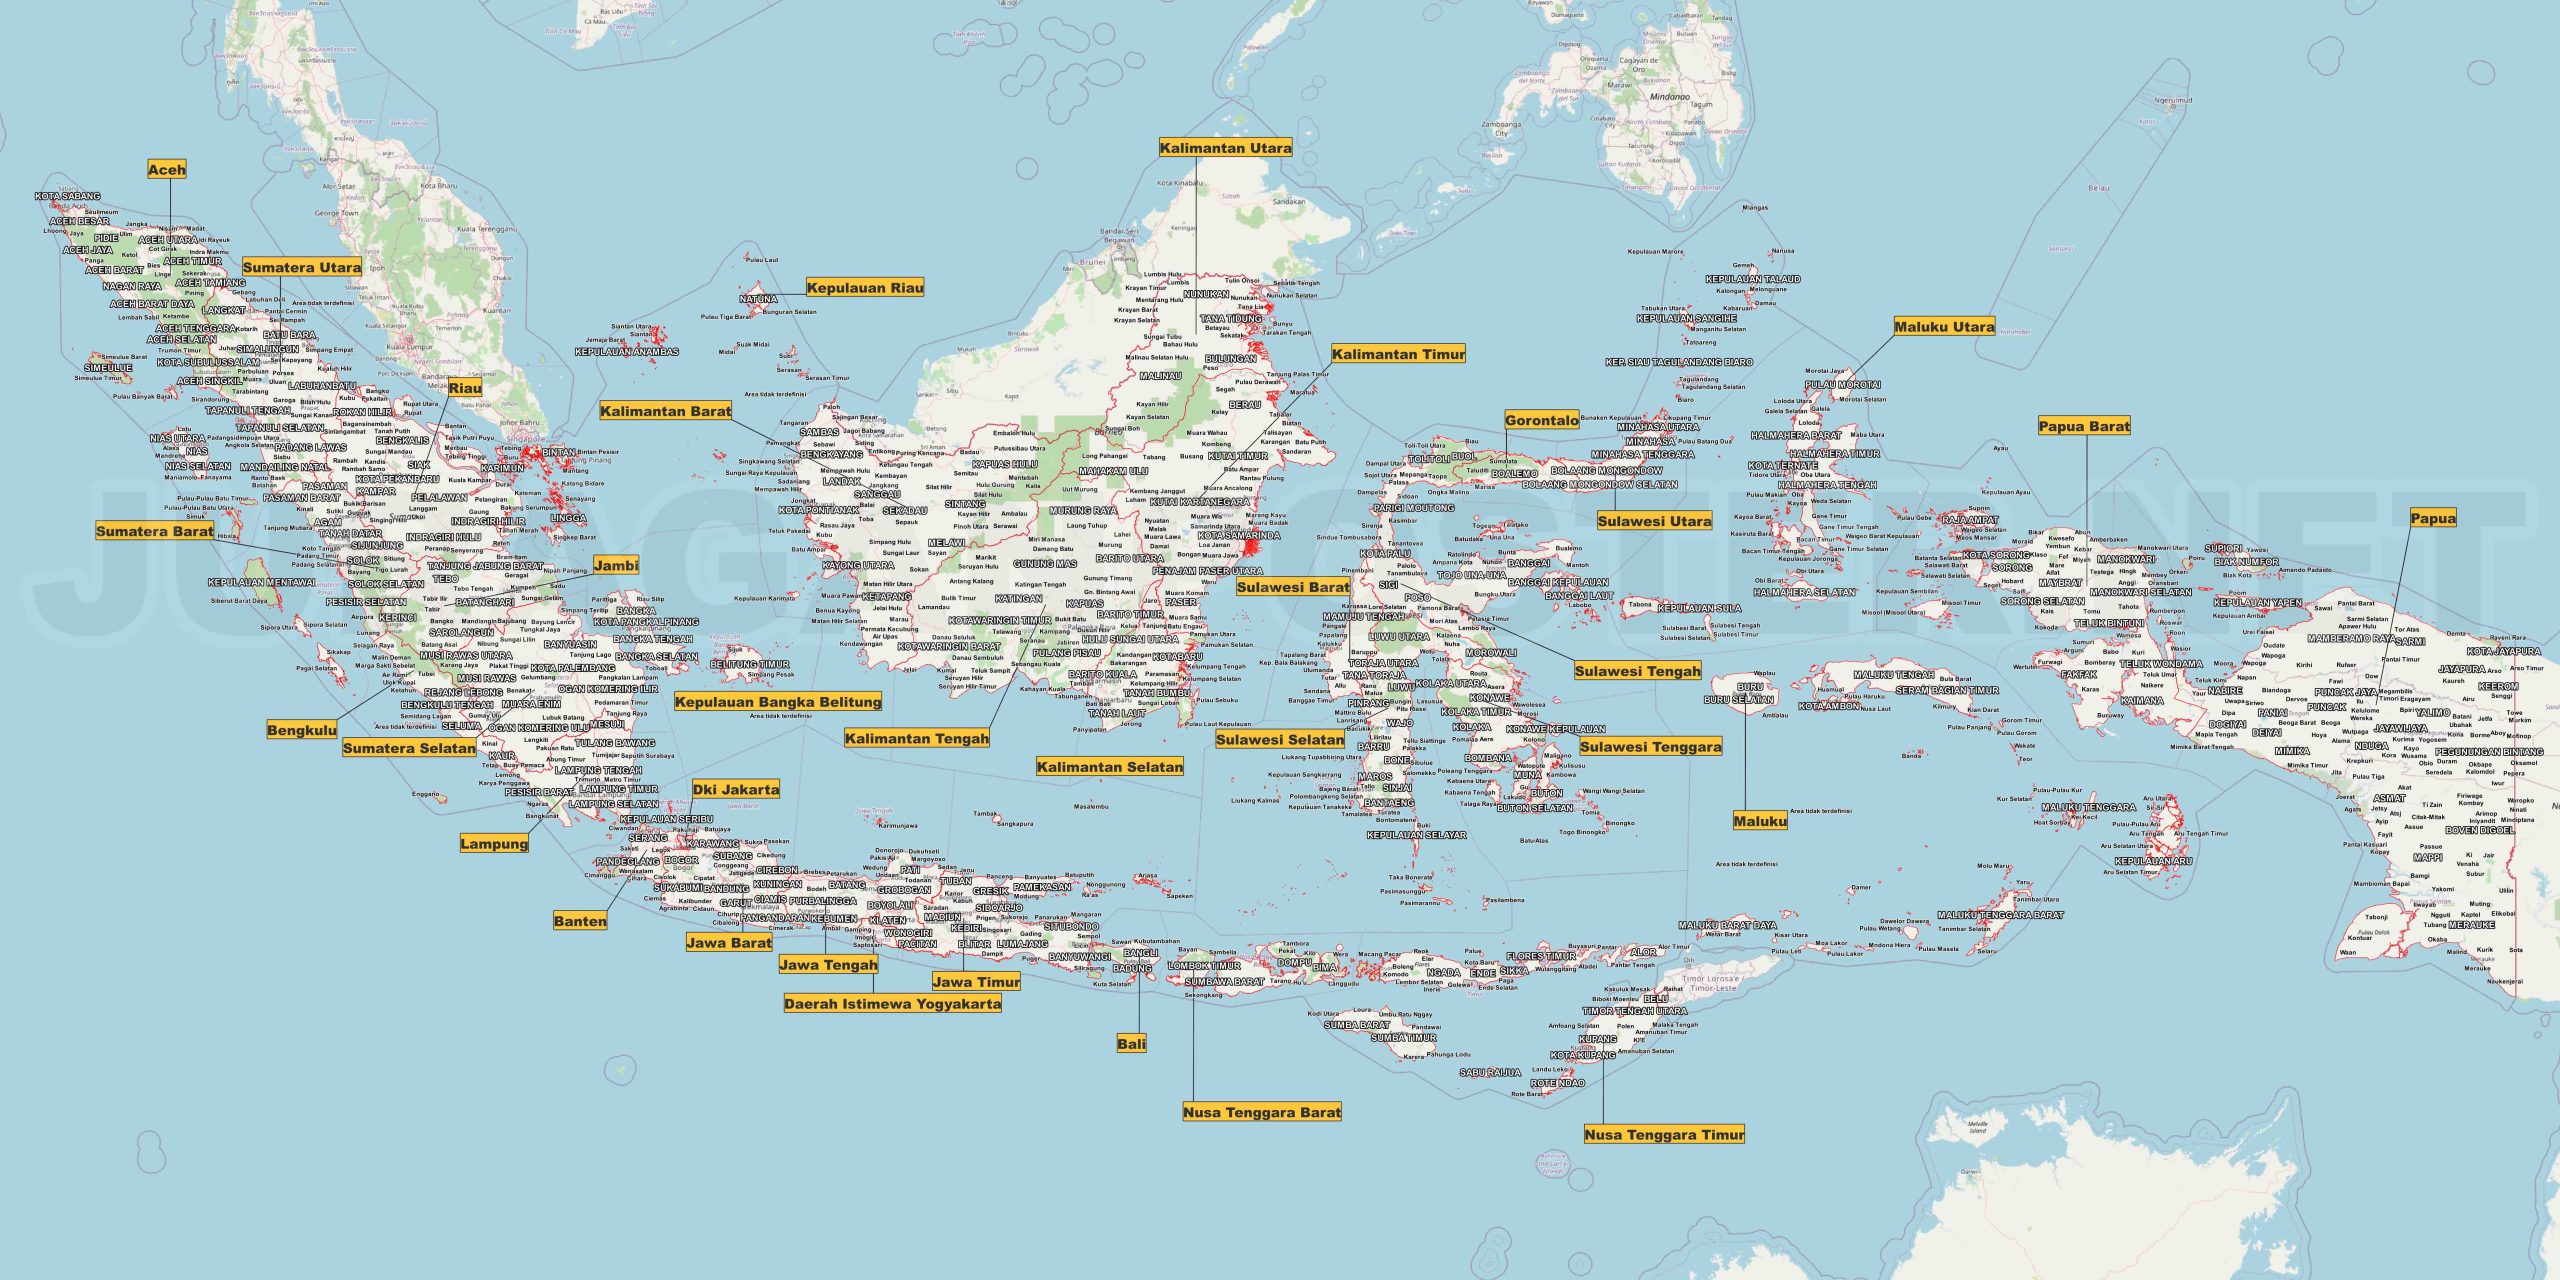 Atlas Peta Indonesia: Referensi Geografis Komprehensif